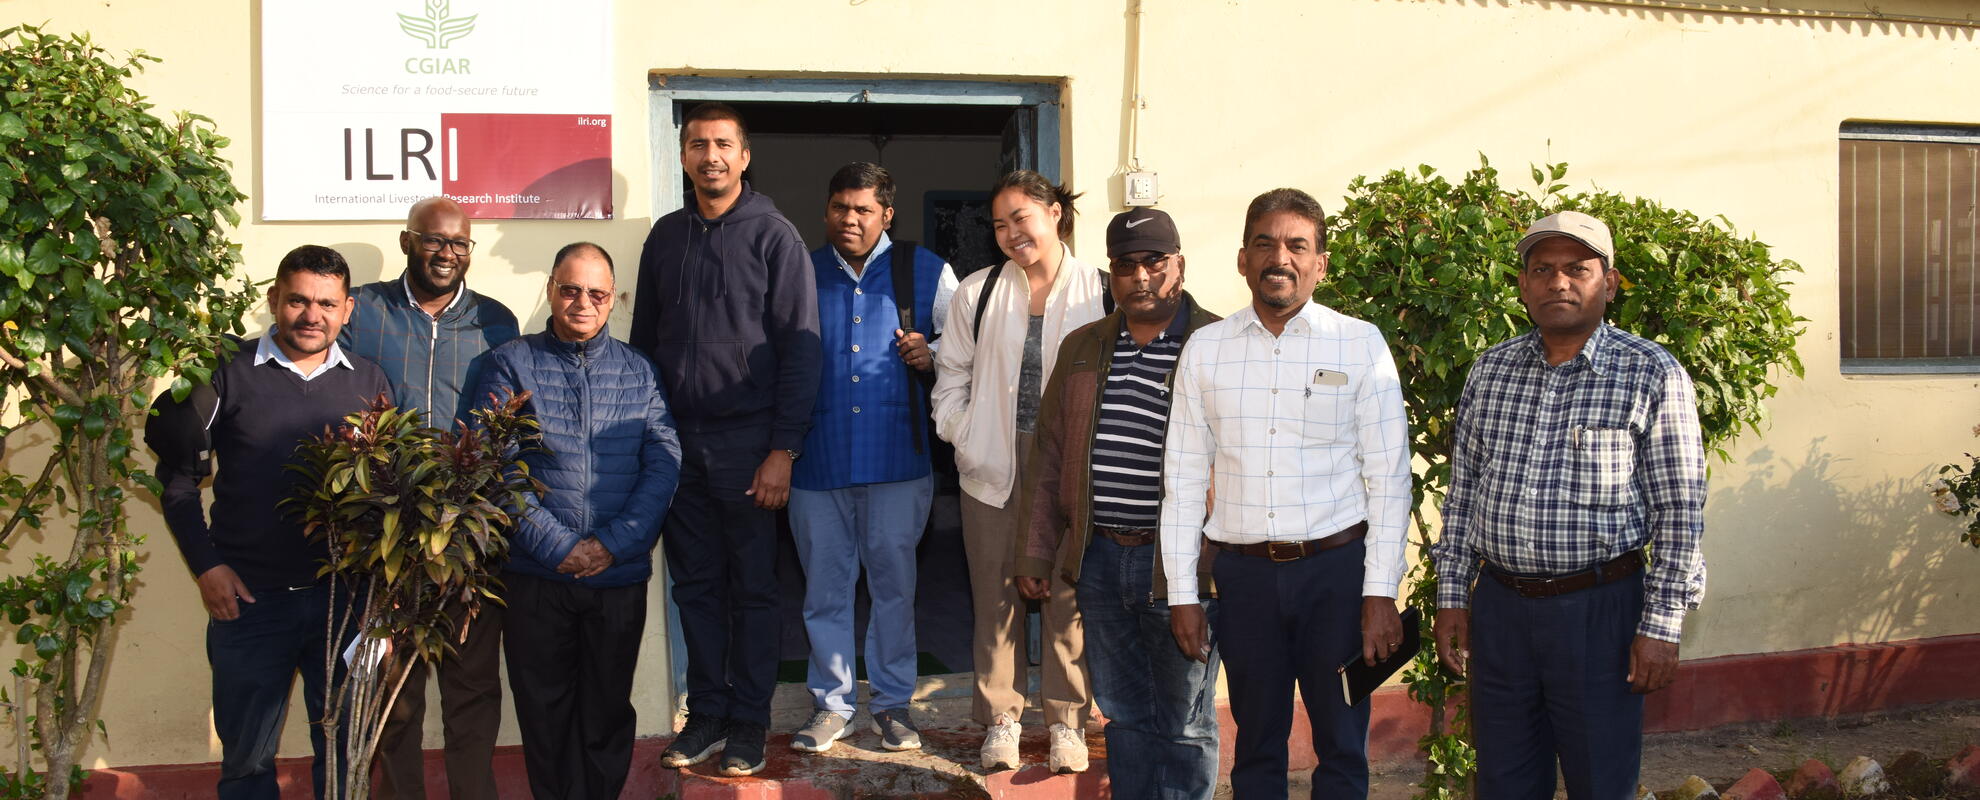 SAPLING Bhaisi team at the ILRI office in Itahari, Nepal (ILRI / Nils Teufel)